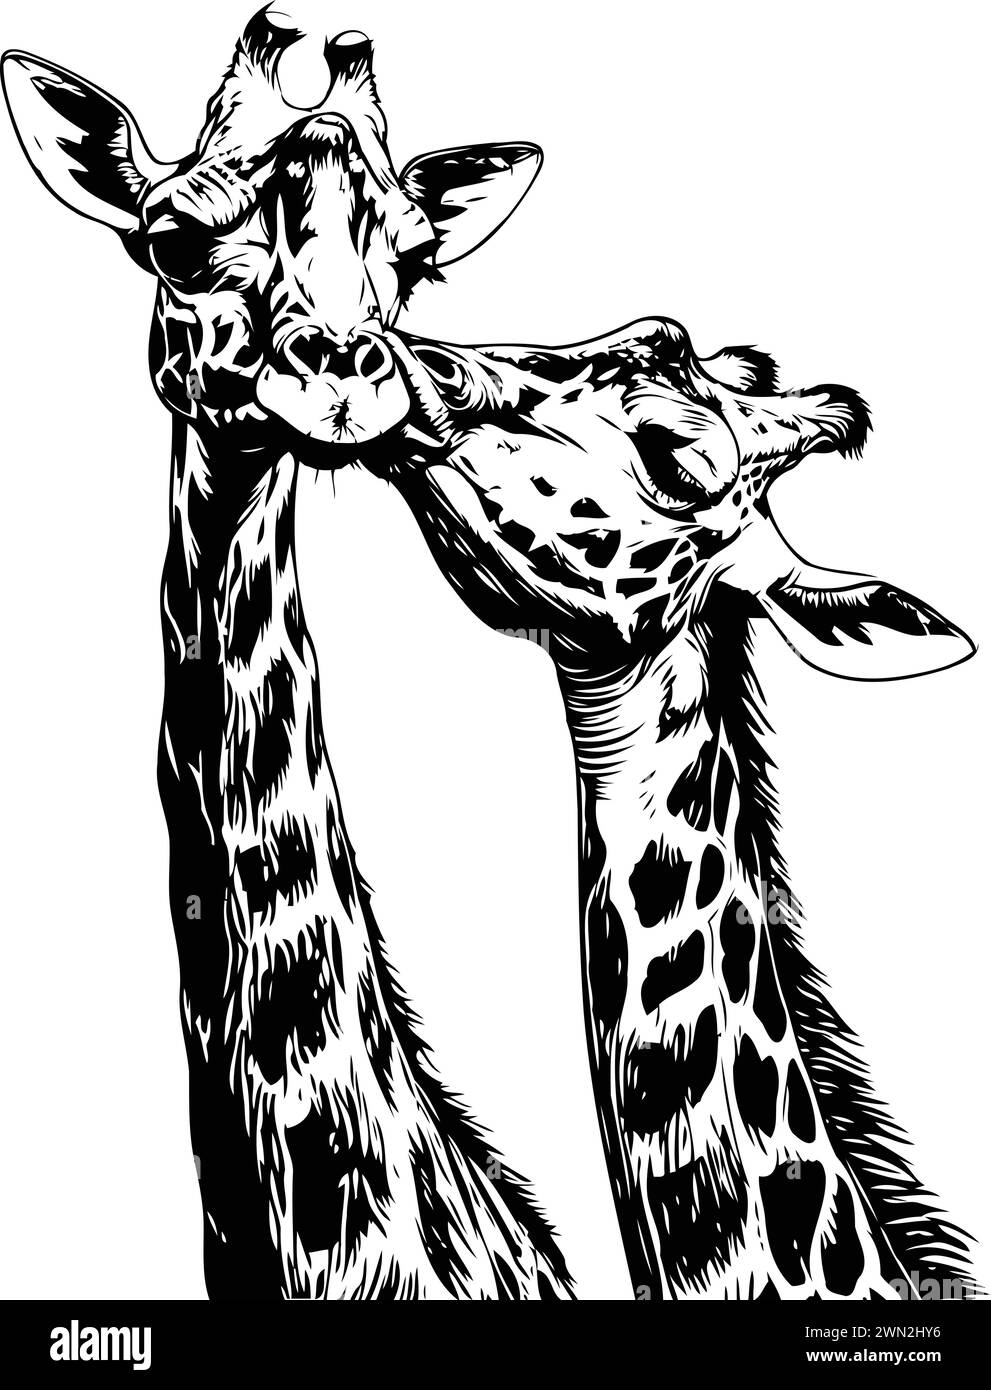 Giraffe head and neck. Vector illustration of a giraffe. Stock Vector